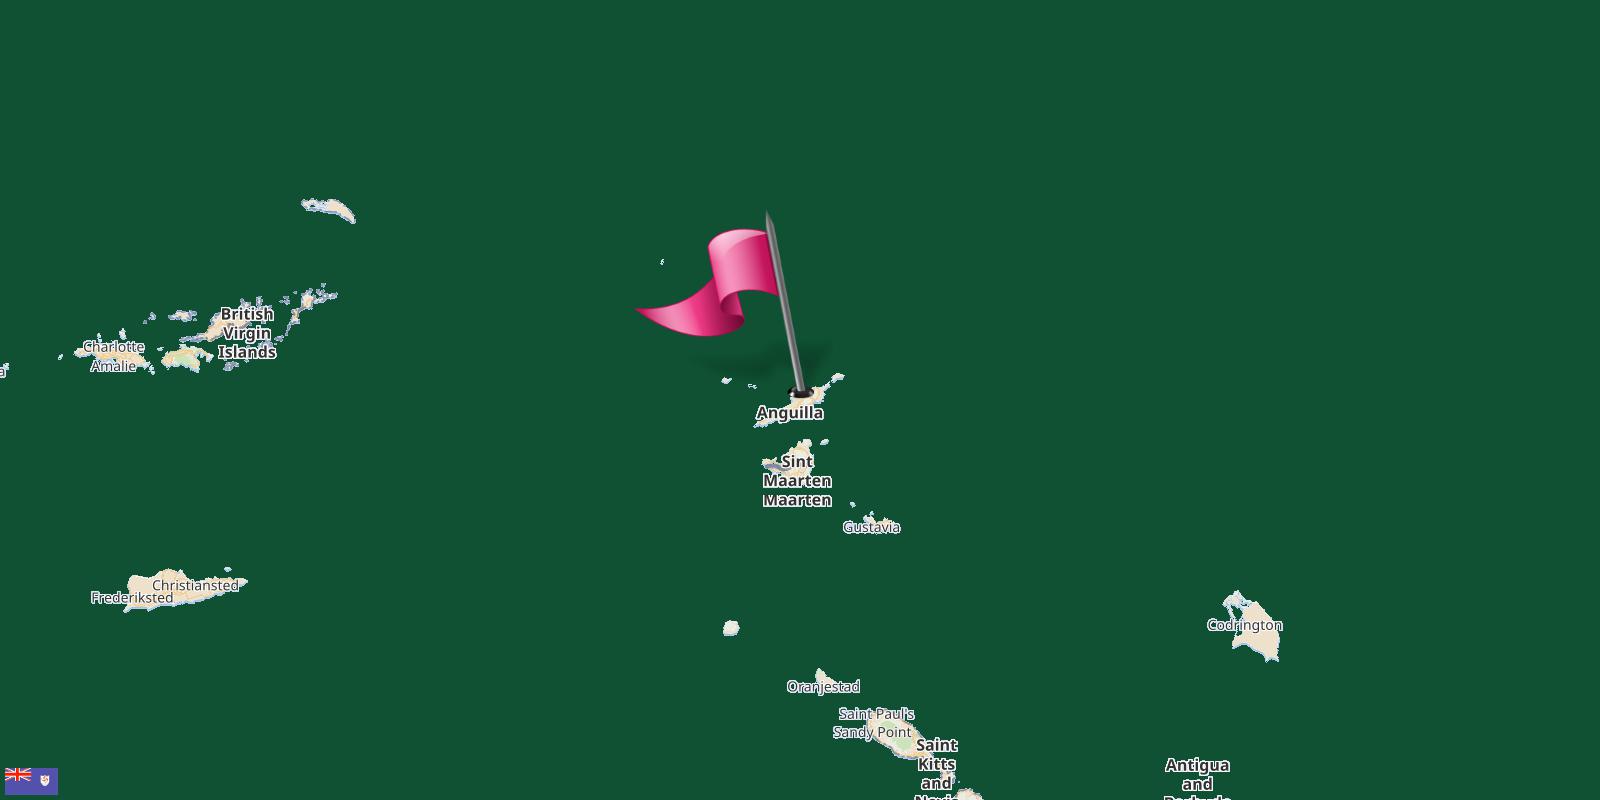 Anguilla map